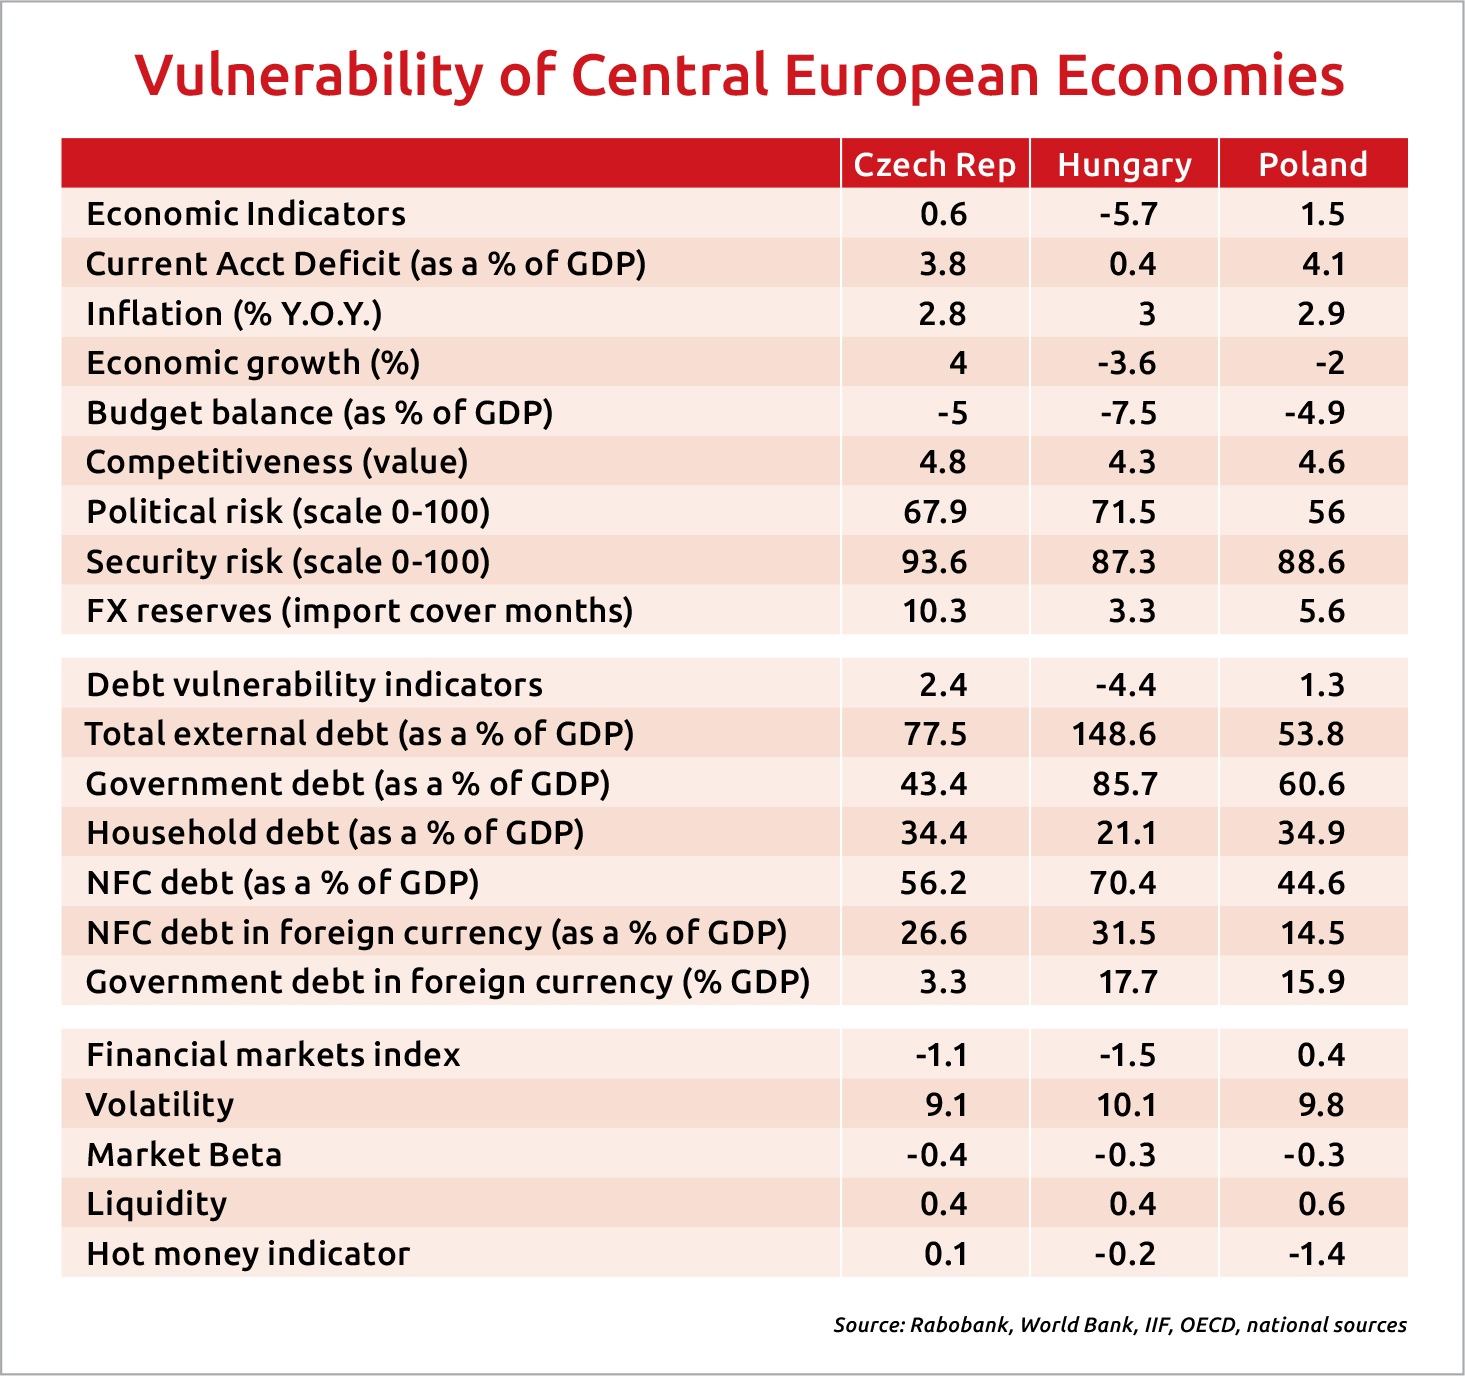 The Economic Vulnerability of Central European Economies